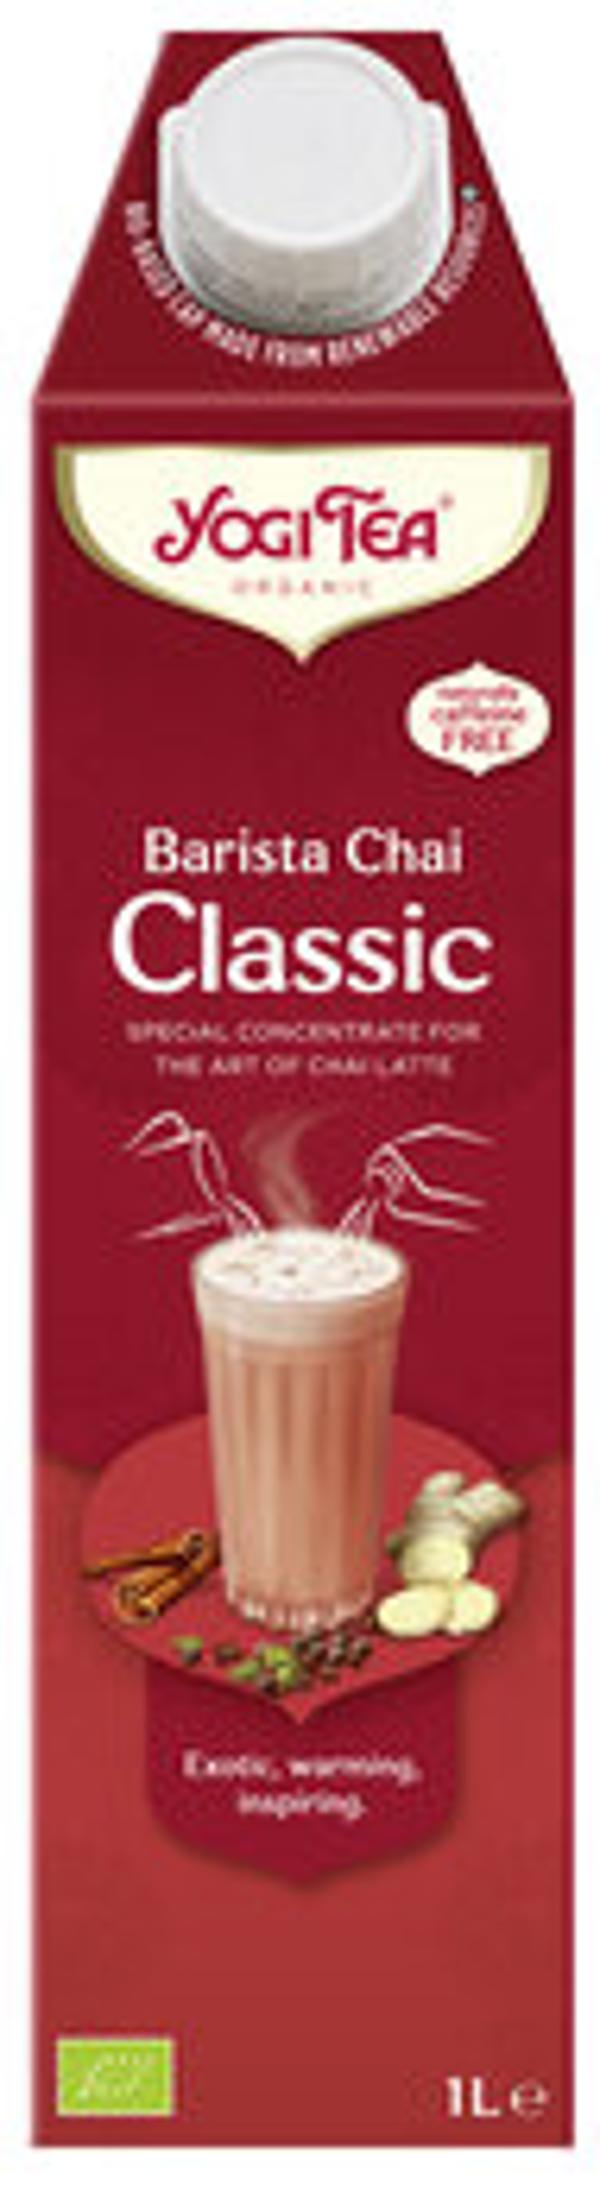 Produktfoto zu Barista Chai Classic, 1 l - 10% reduziert, MHD 26.11.2024